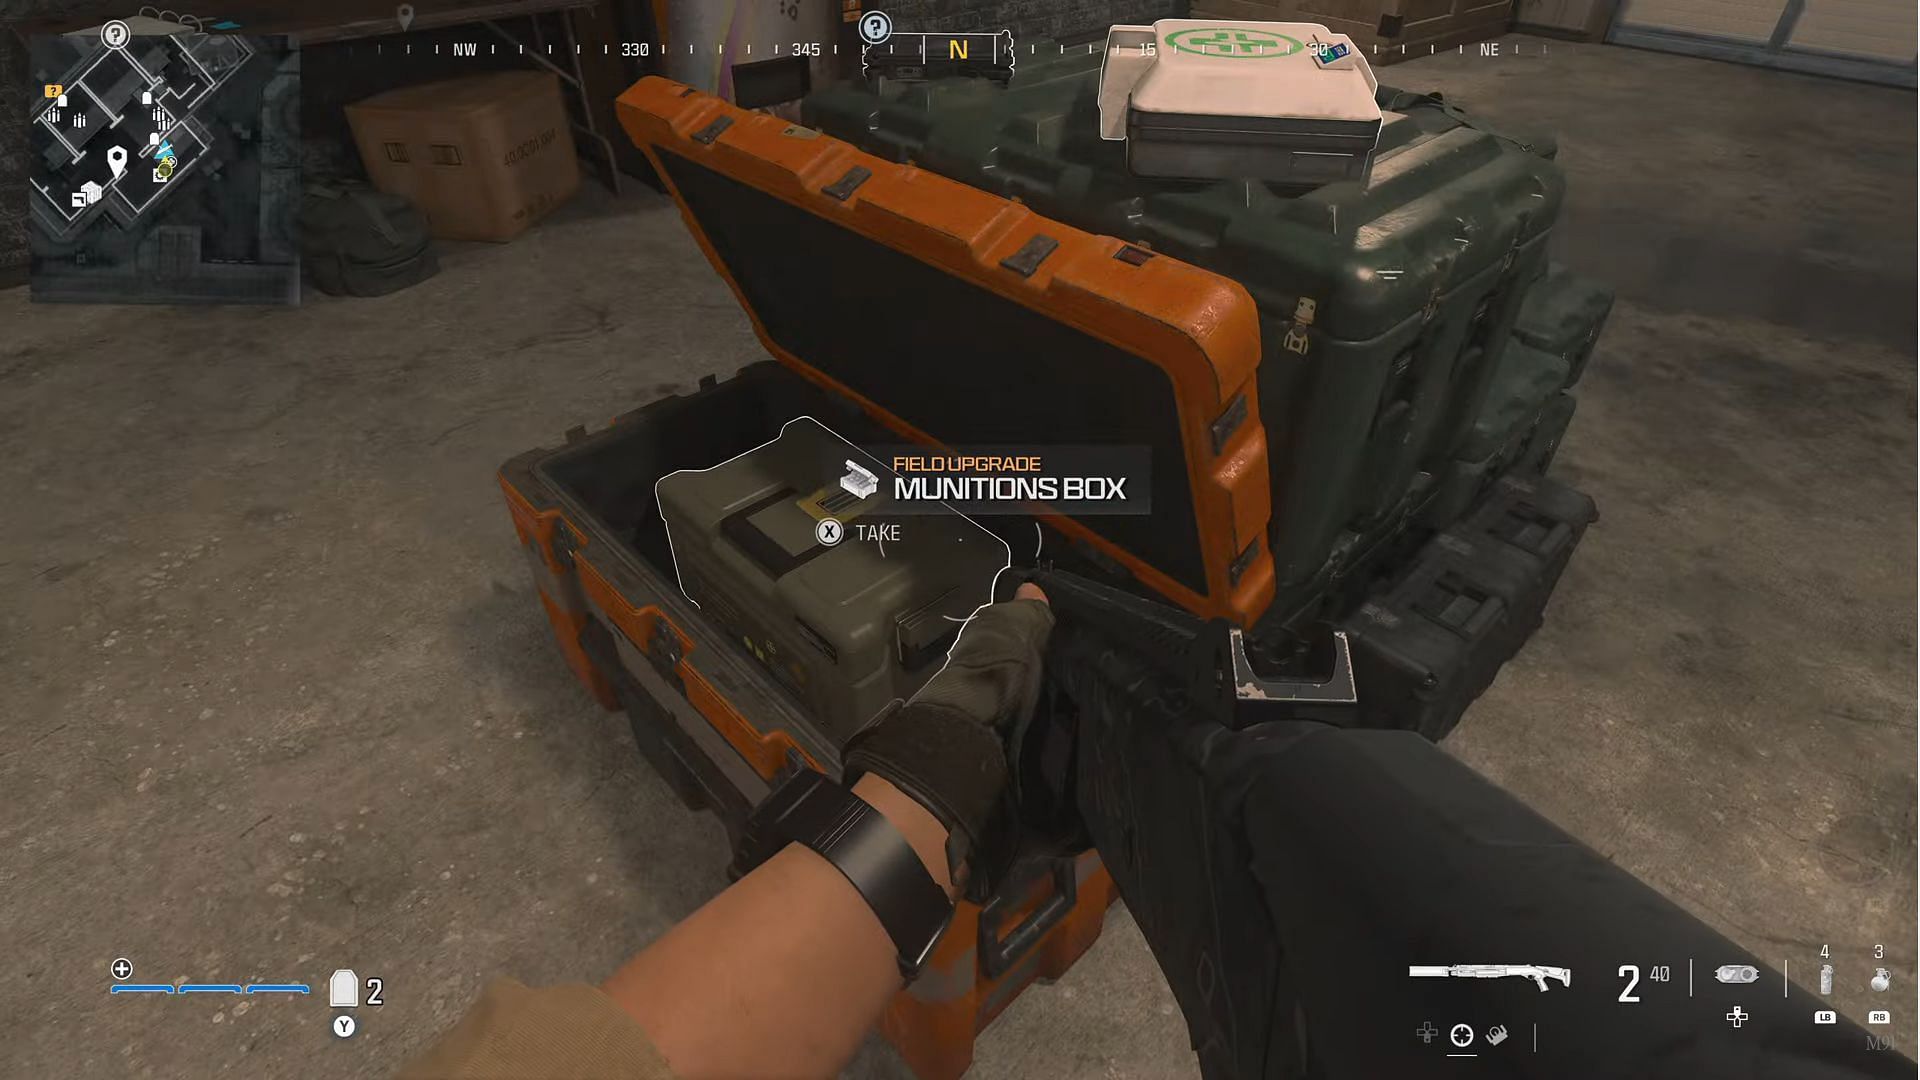 Munitions Box location (Image via Activision)